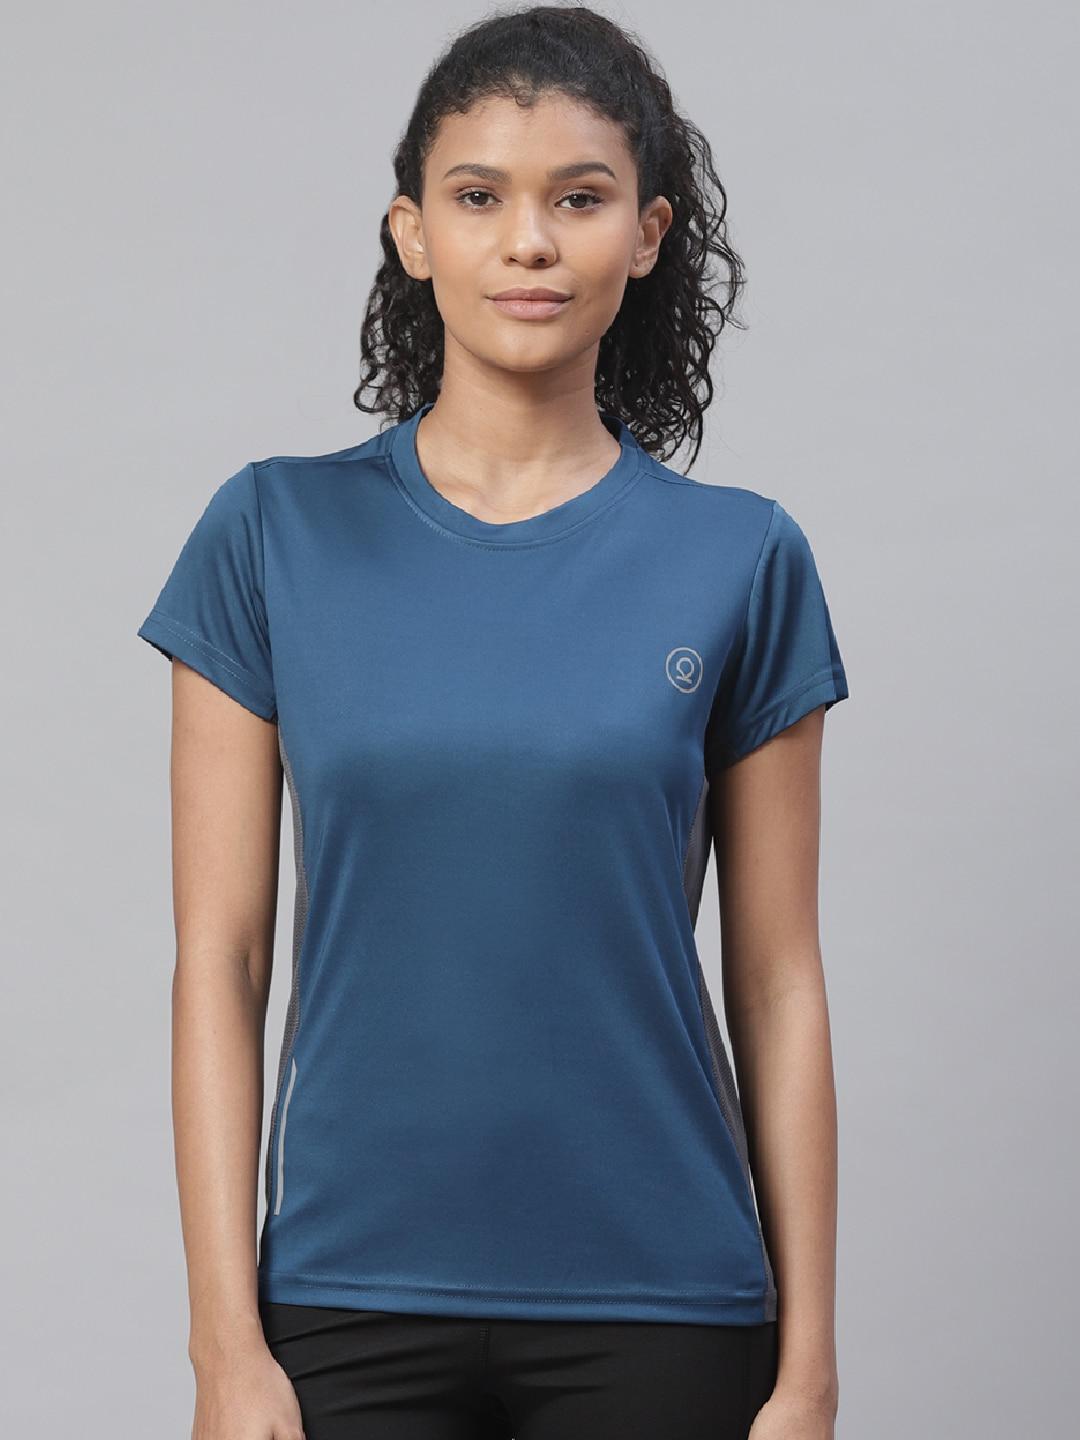 Chkokko Women Teal Blue Solid Round Neck Yoga T-shirt